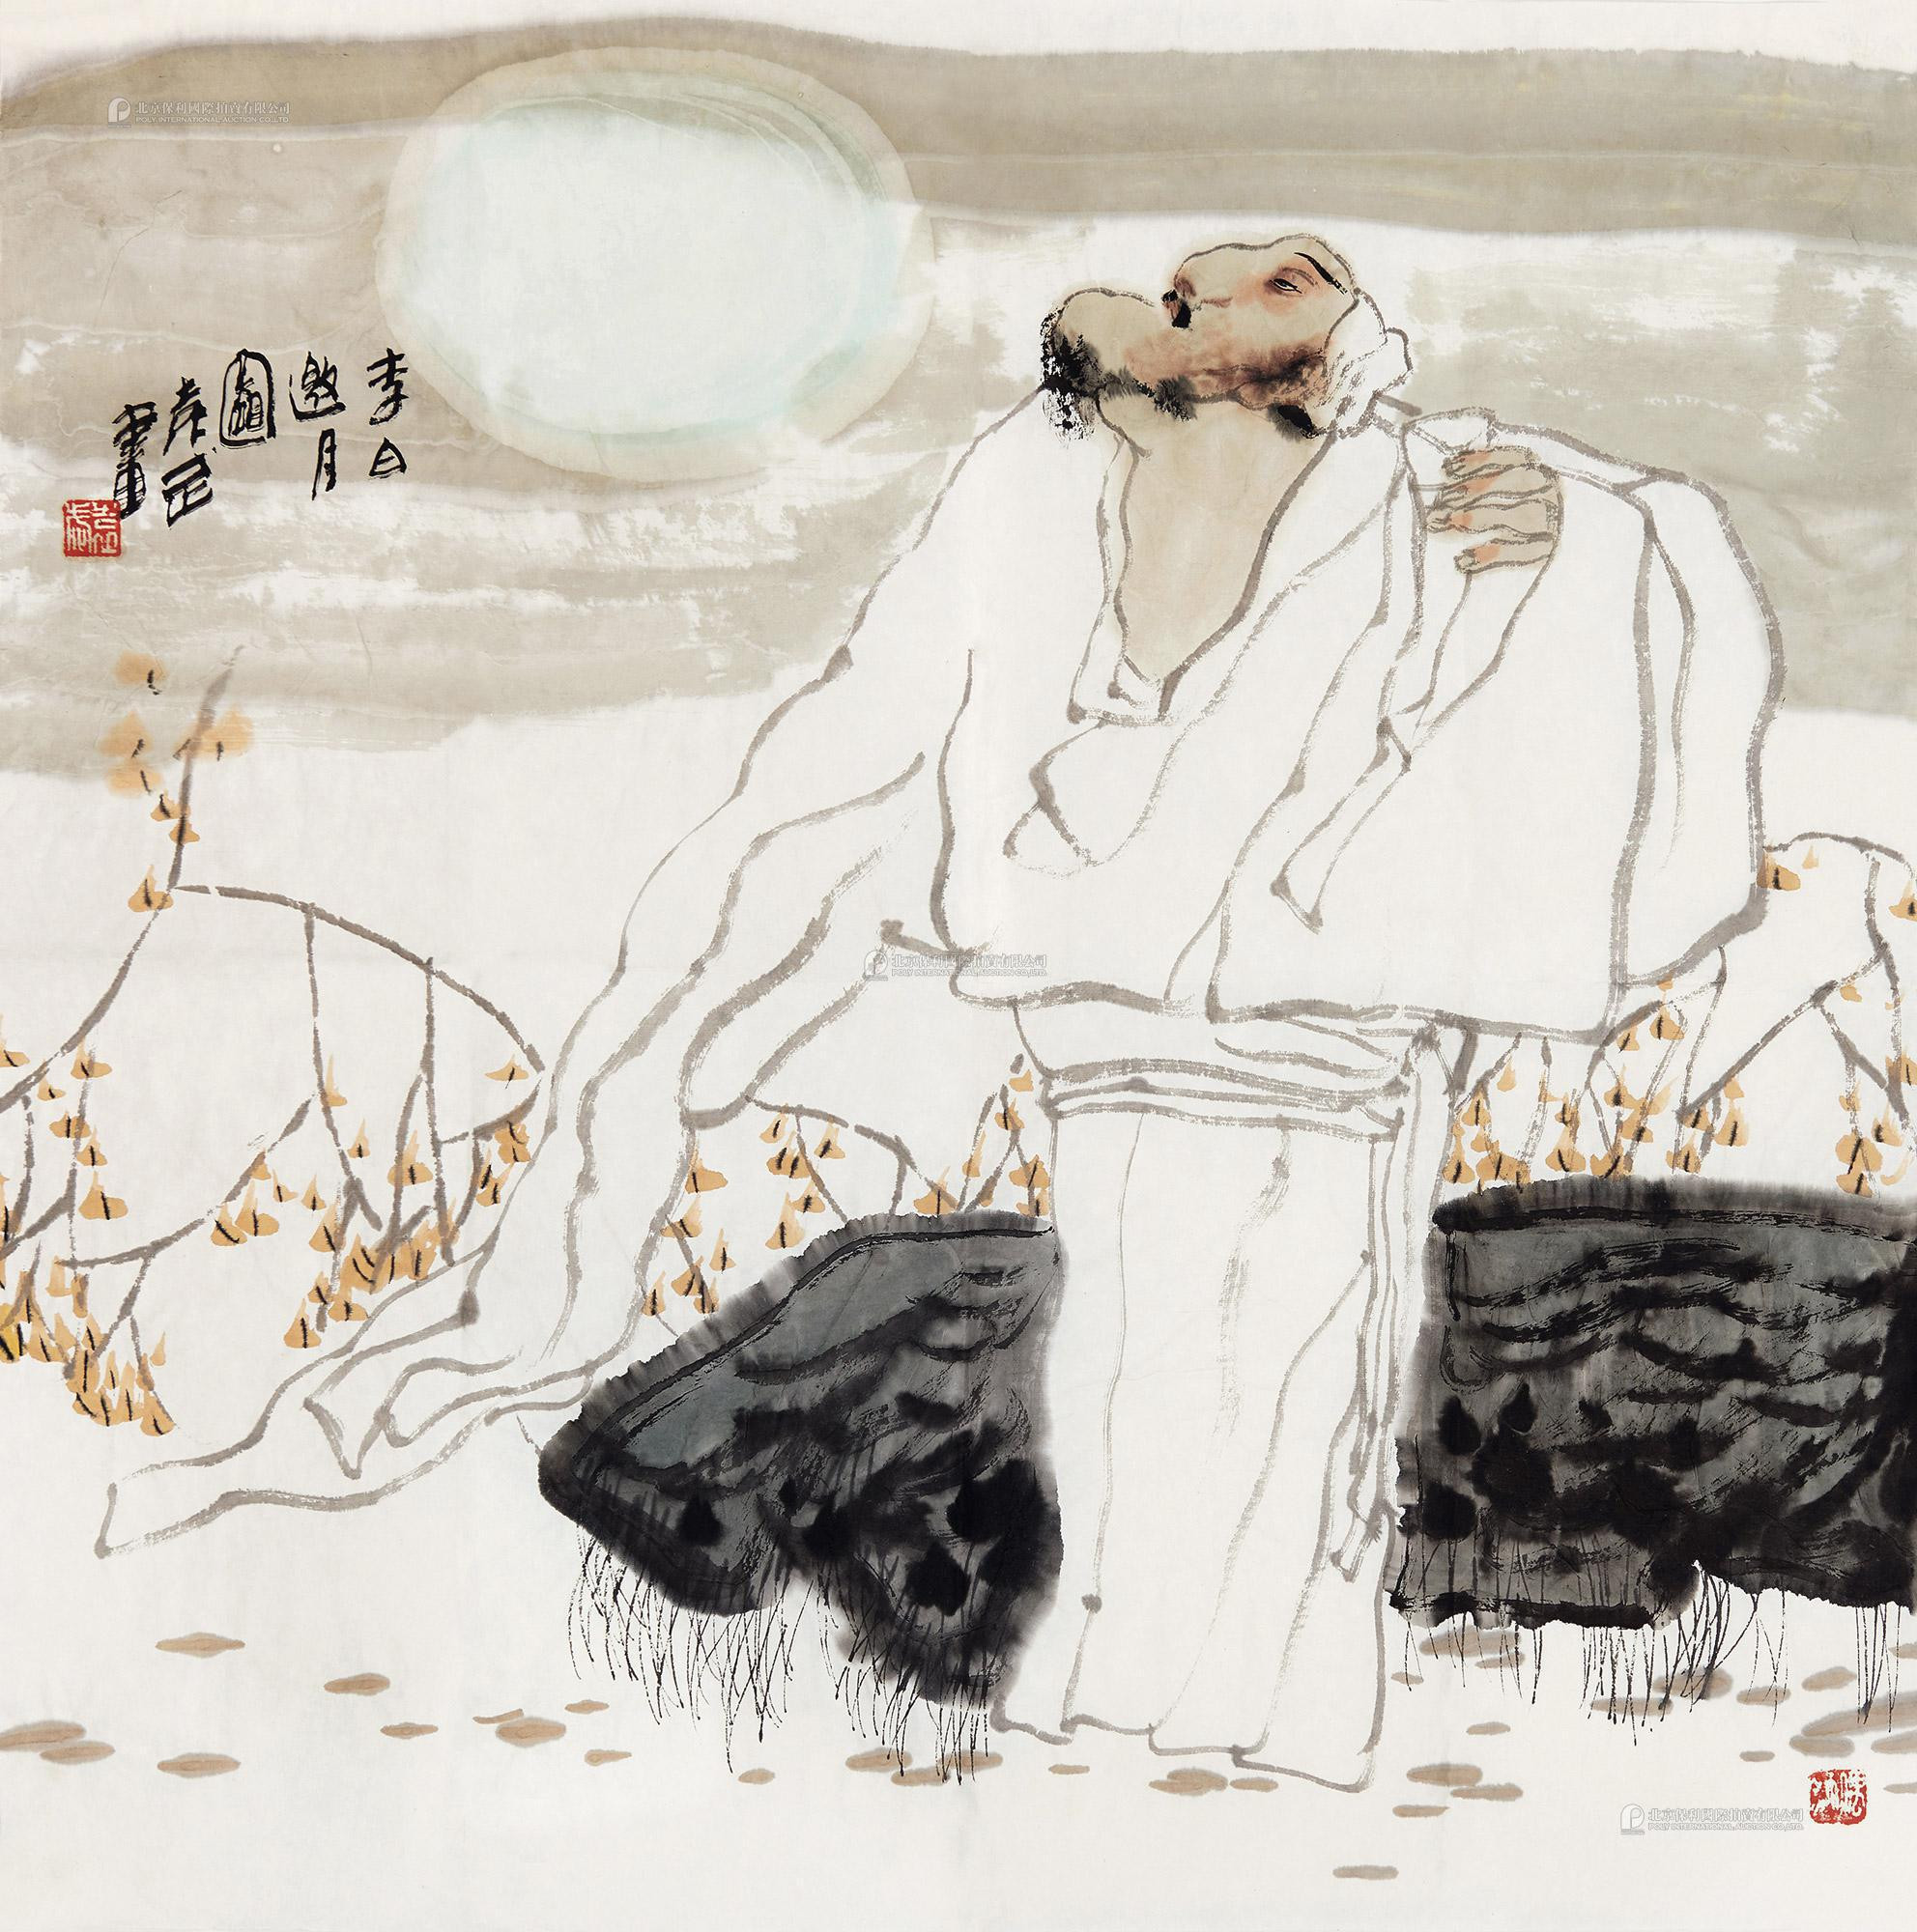 Li Shaobai and Moon